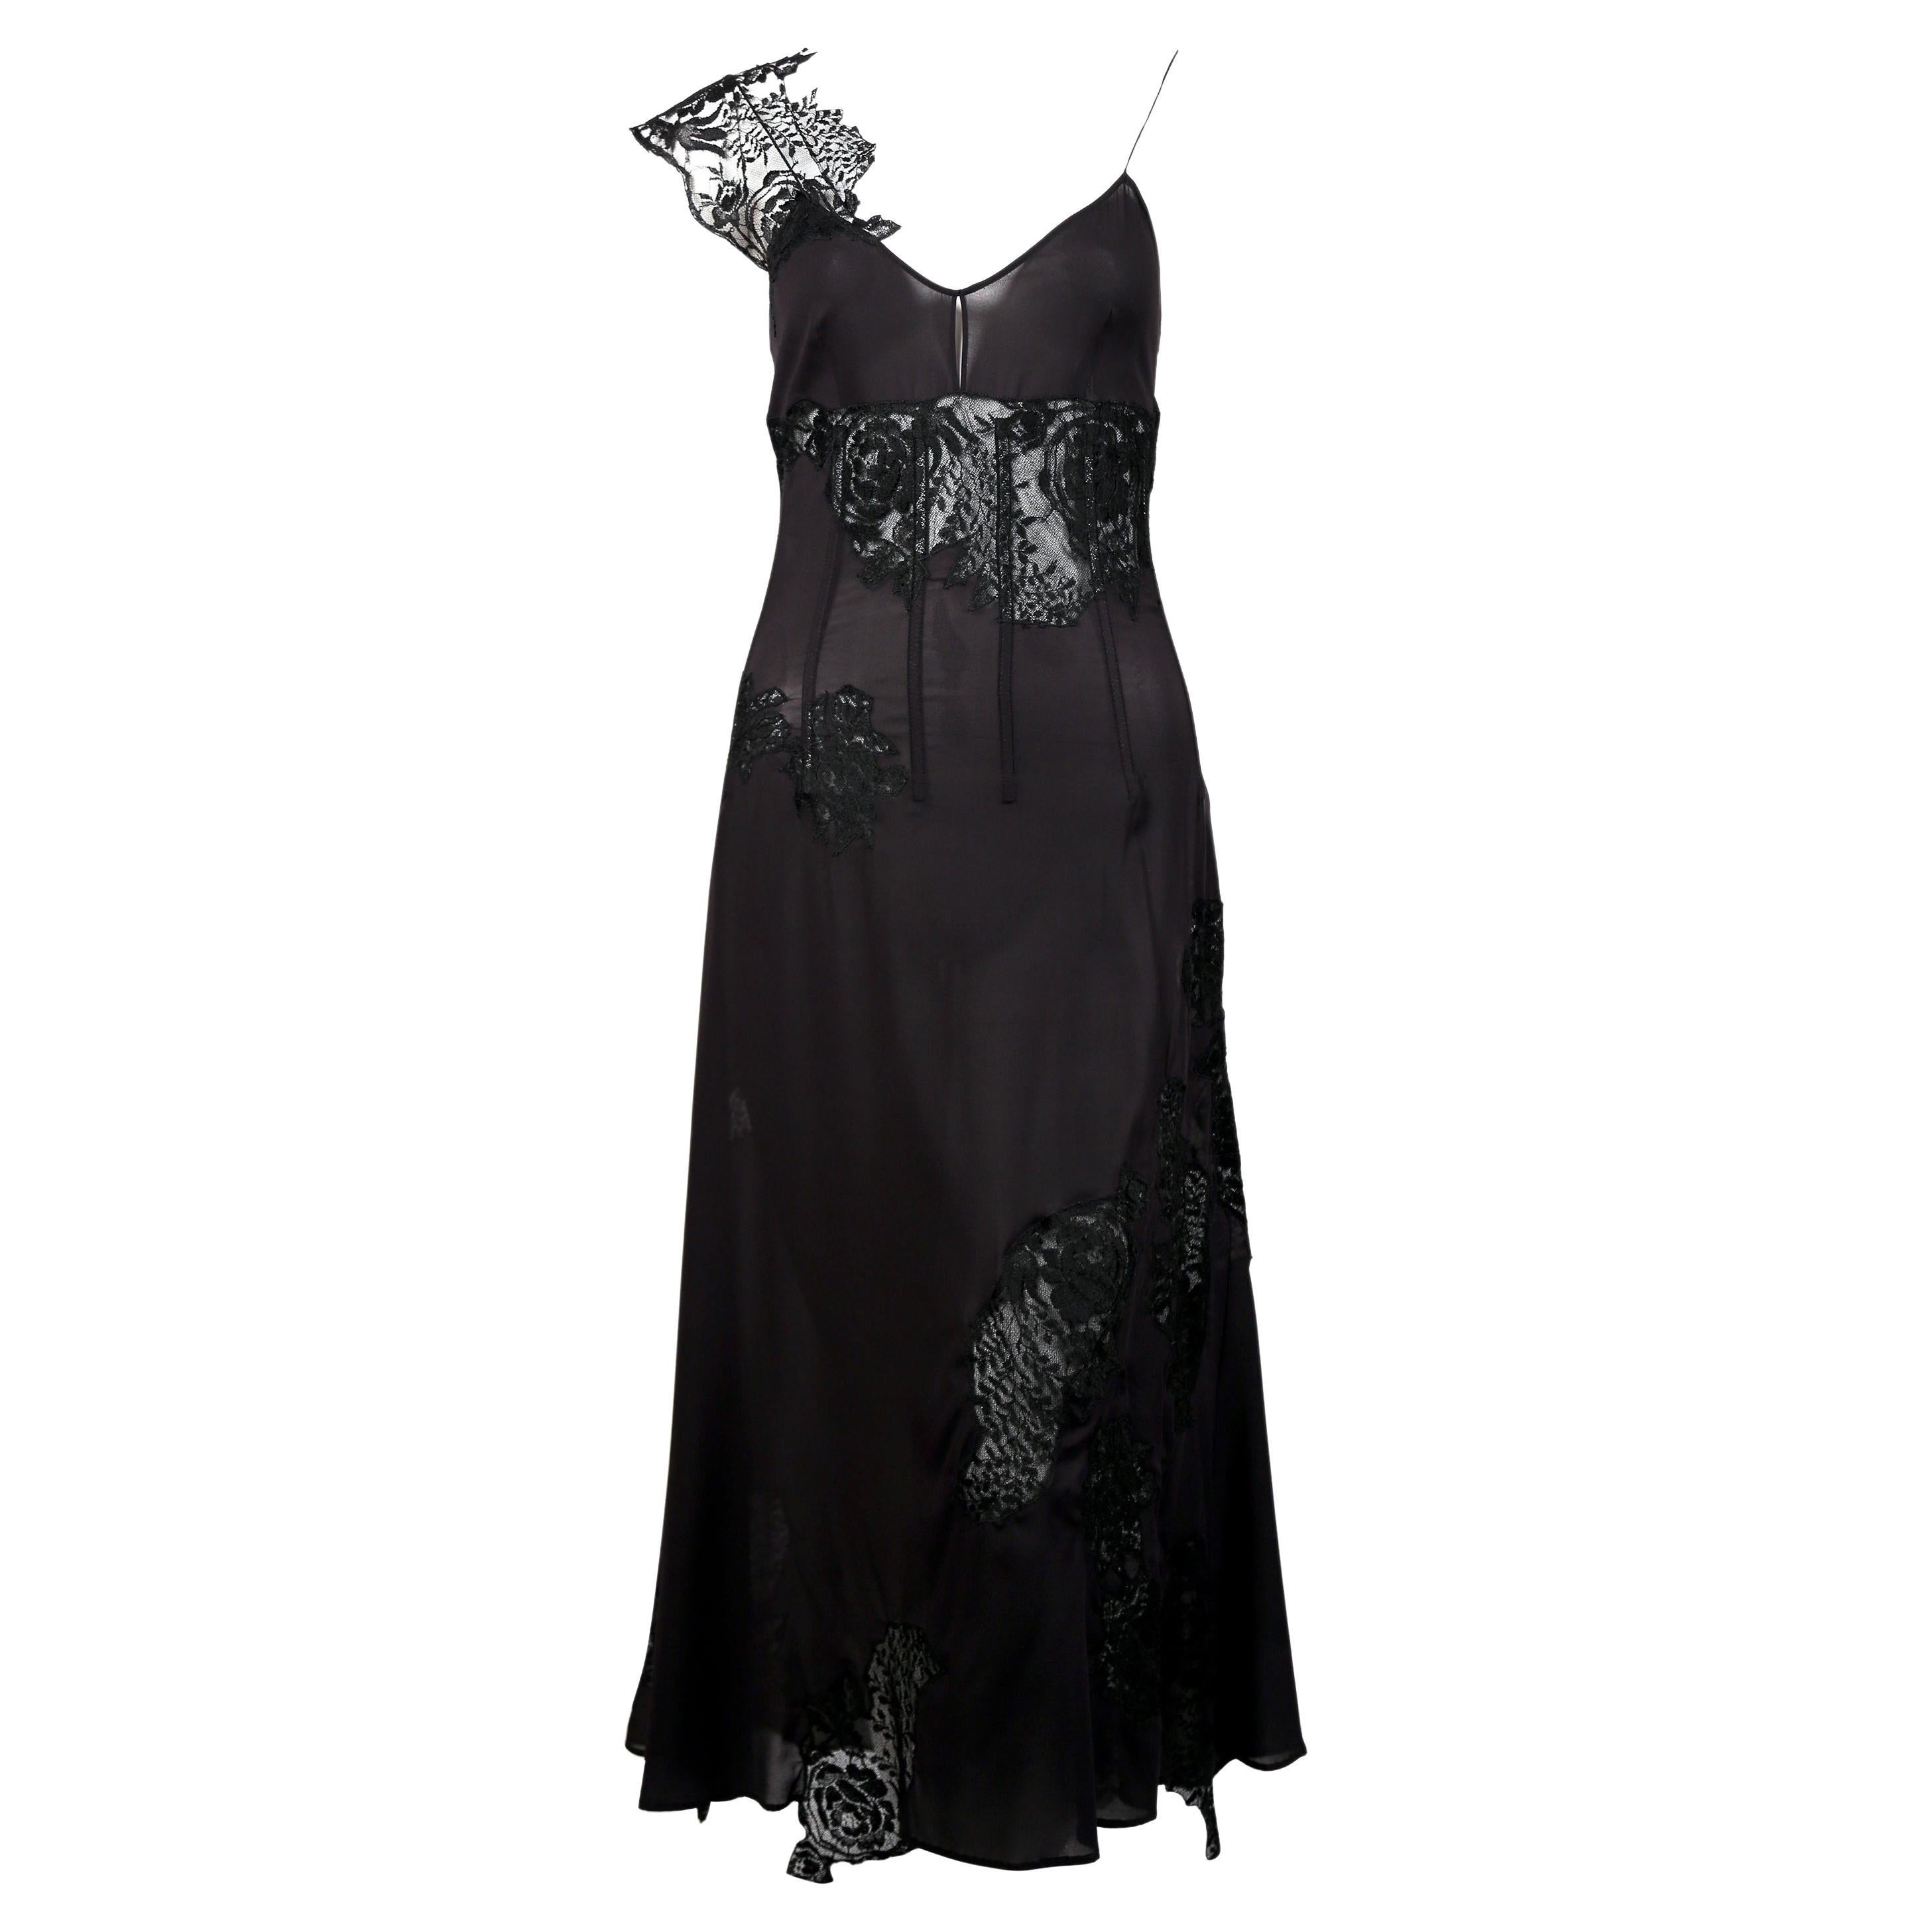 2002 DOLCE & GABBANA black lace corseted runway dress